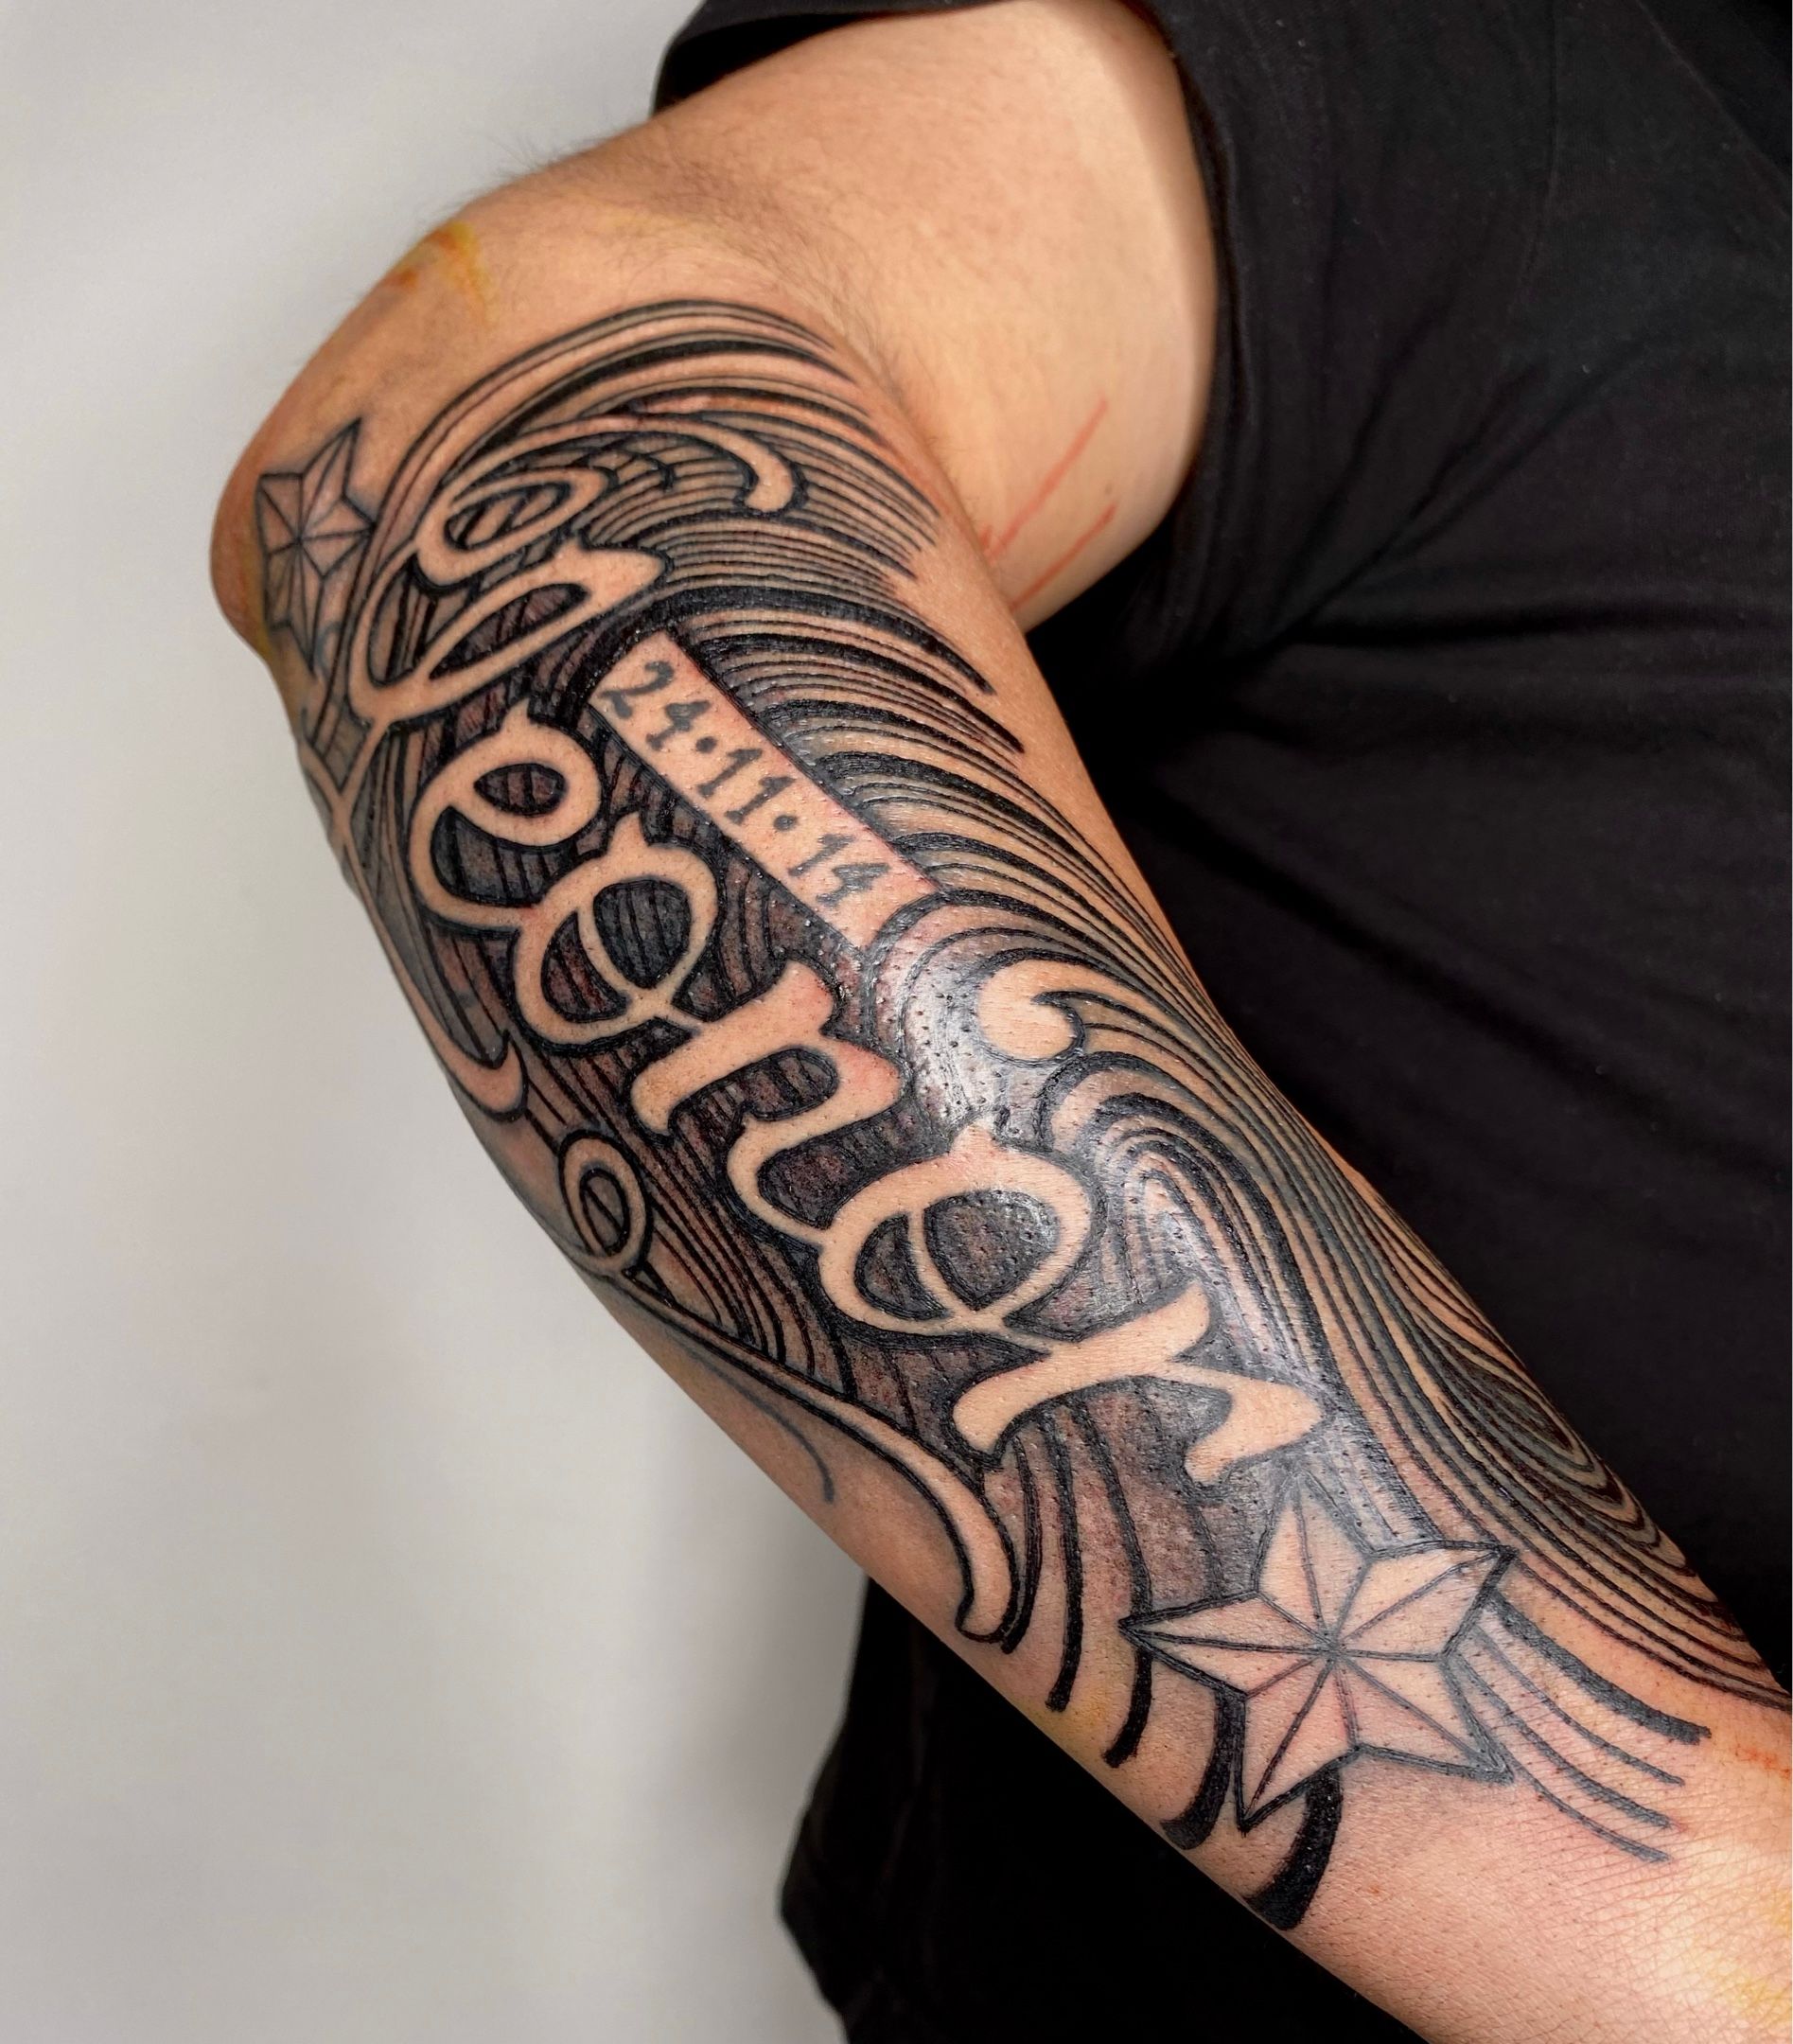 Tattoo uploaded by Daniel Ovejo • Tatuaje en progreso Daniel ovejo • Tattoodo